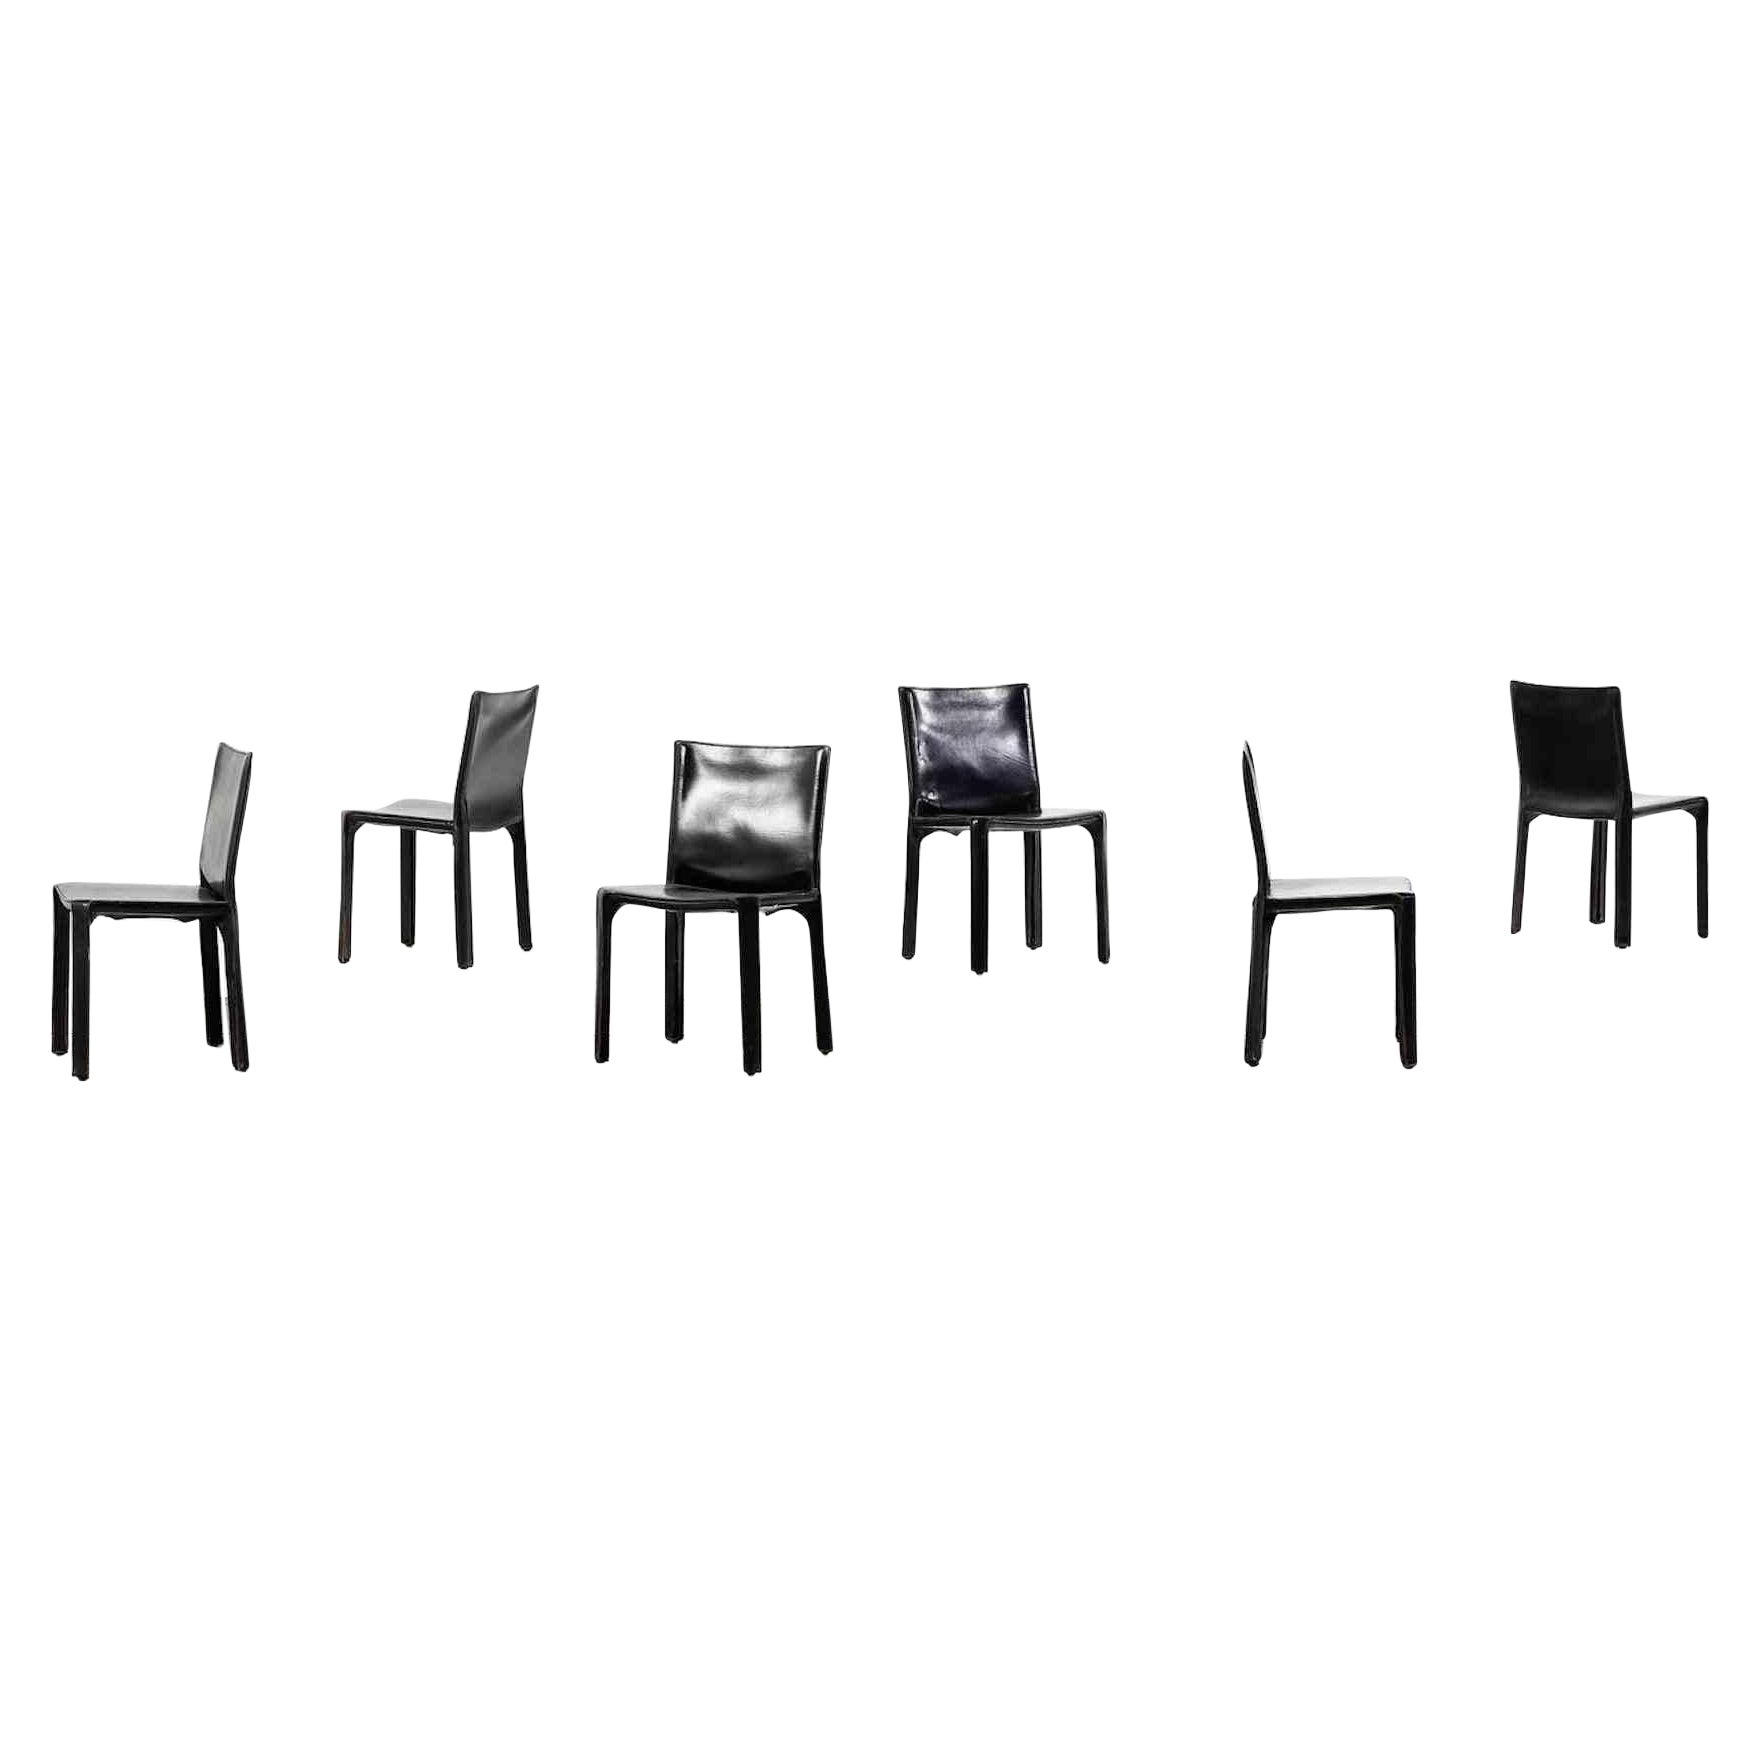 Six CAB 412 chairs by Mario Bellini for Cassina, Italy 1977.

Original manufacturing mark.

Metal and Leather. 

Ref: Giuliana Gramigna, Repertorio del design italiano 1950- 2000, Torino, 2003, p. 247.

Cm 47,00 x 82,00 x 45,00.

Very god condition.